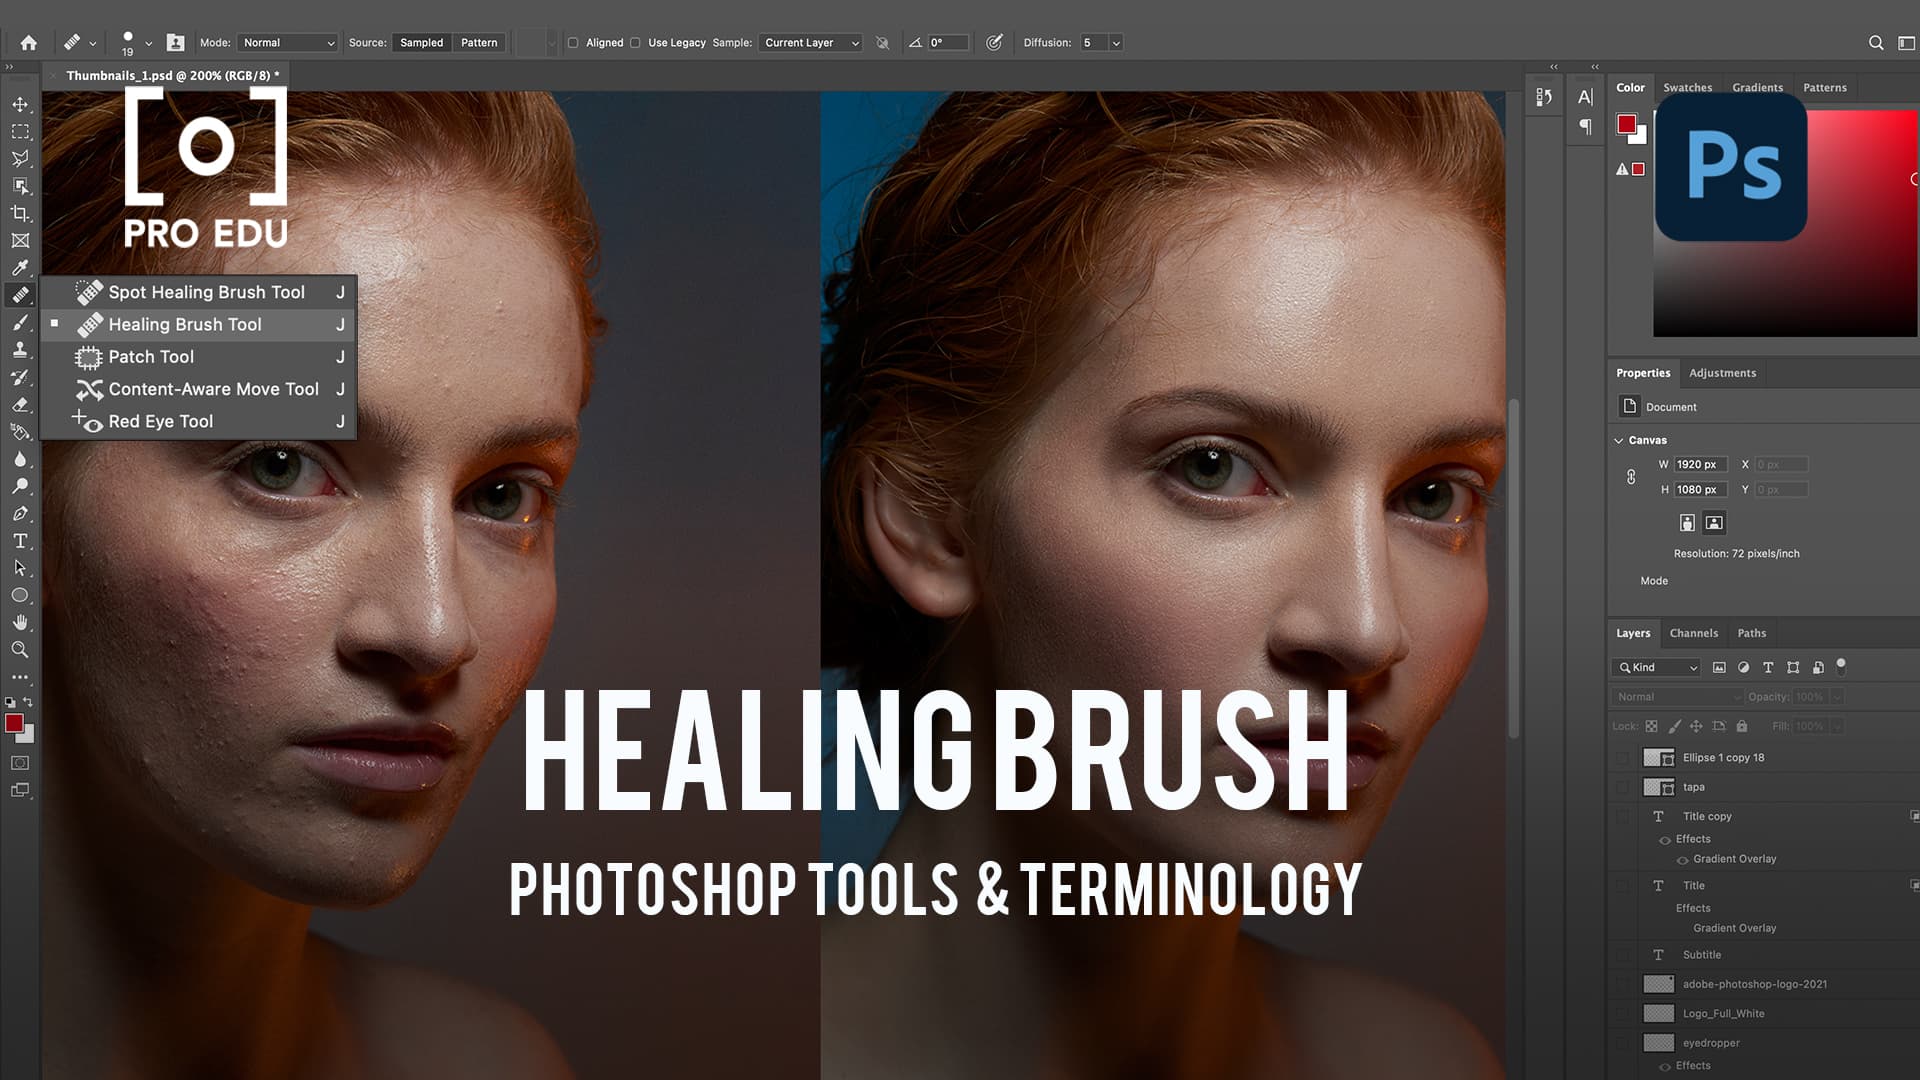 Healing Brush Tool in Photoshop - PRO EDU Tutorial